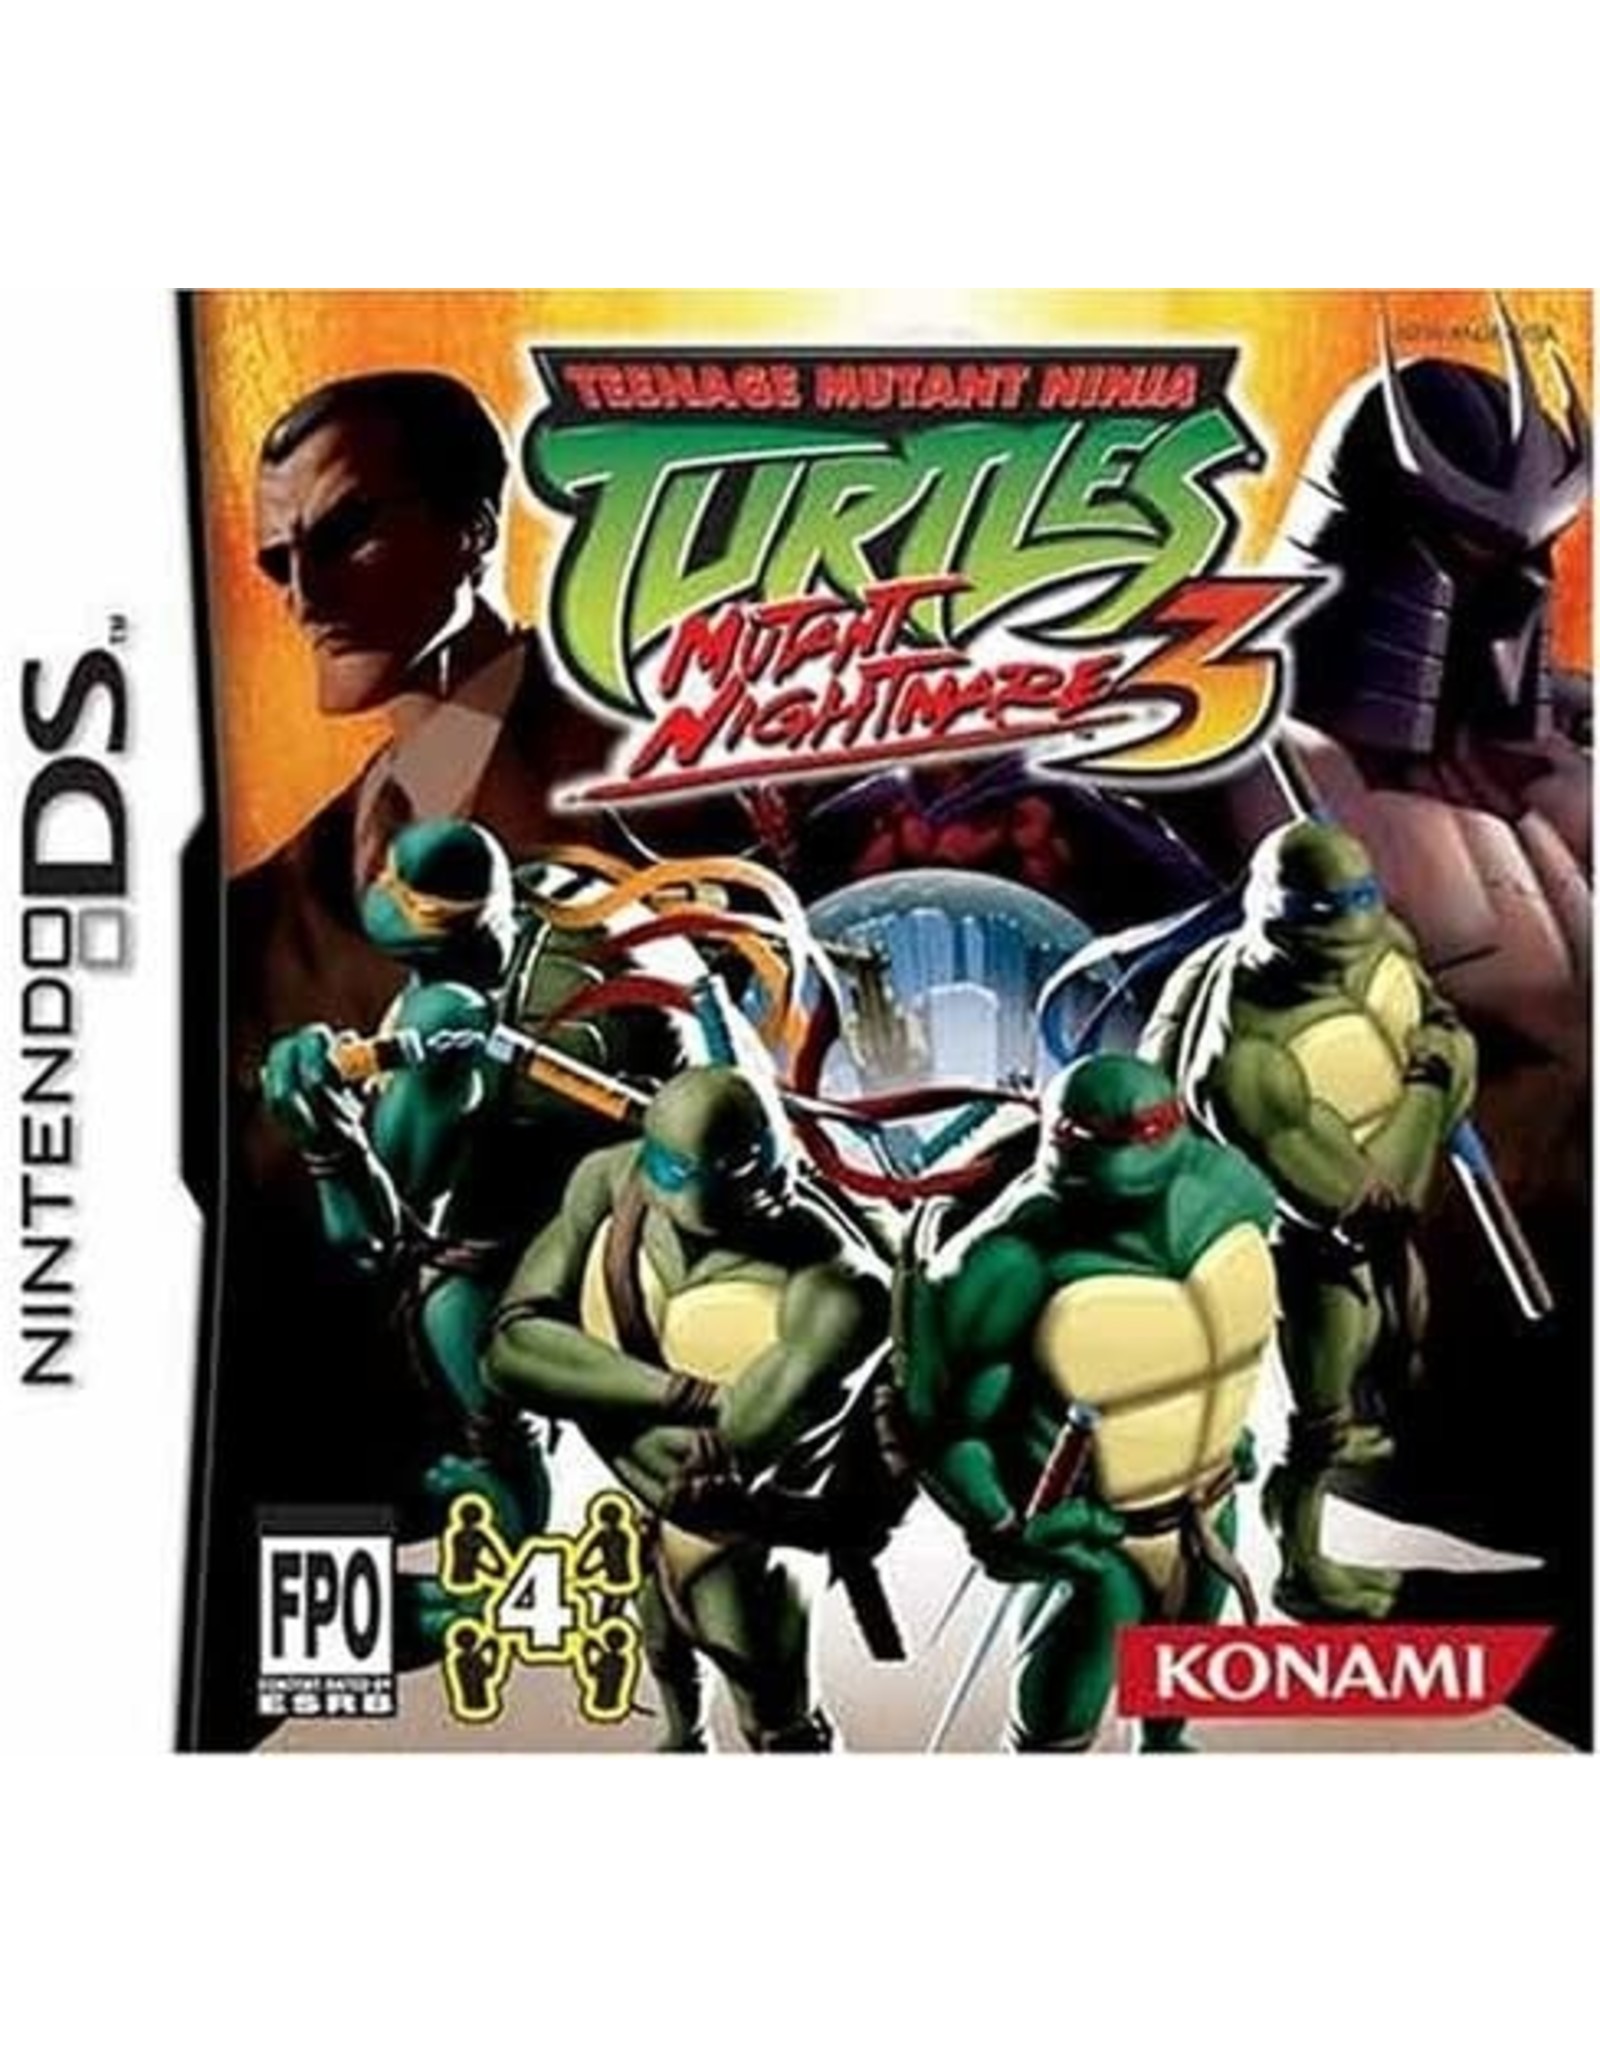 Nintendo DS Teenage Mutant Ninja Turtles 3 Mutant Nightmare (Cart Only)